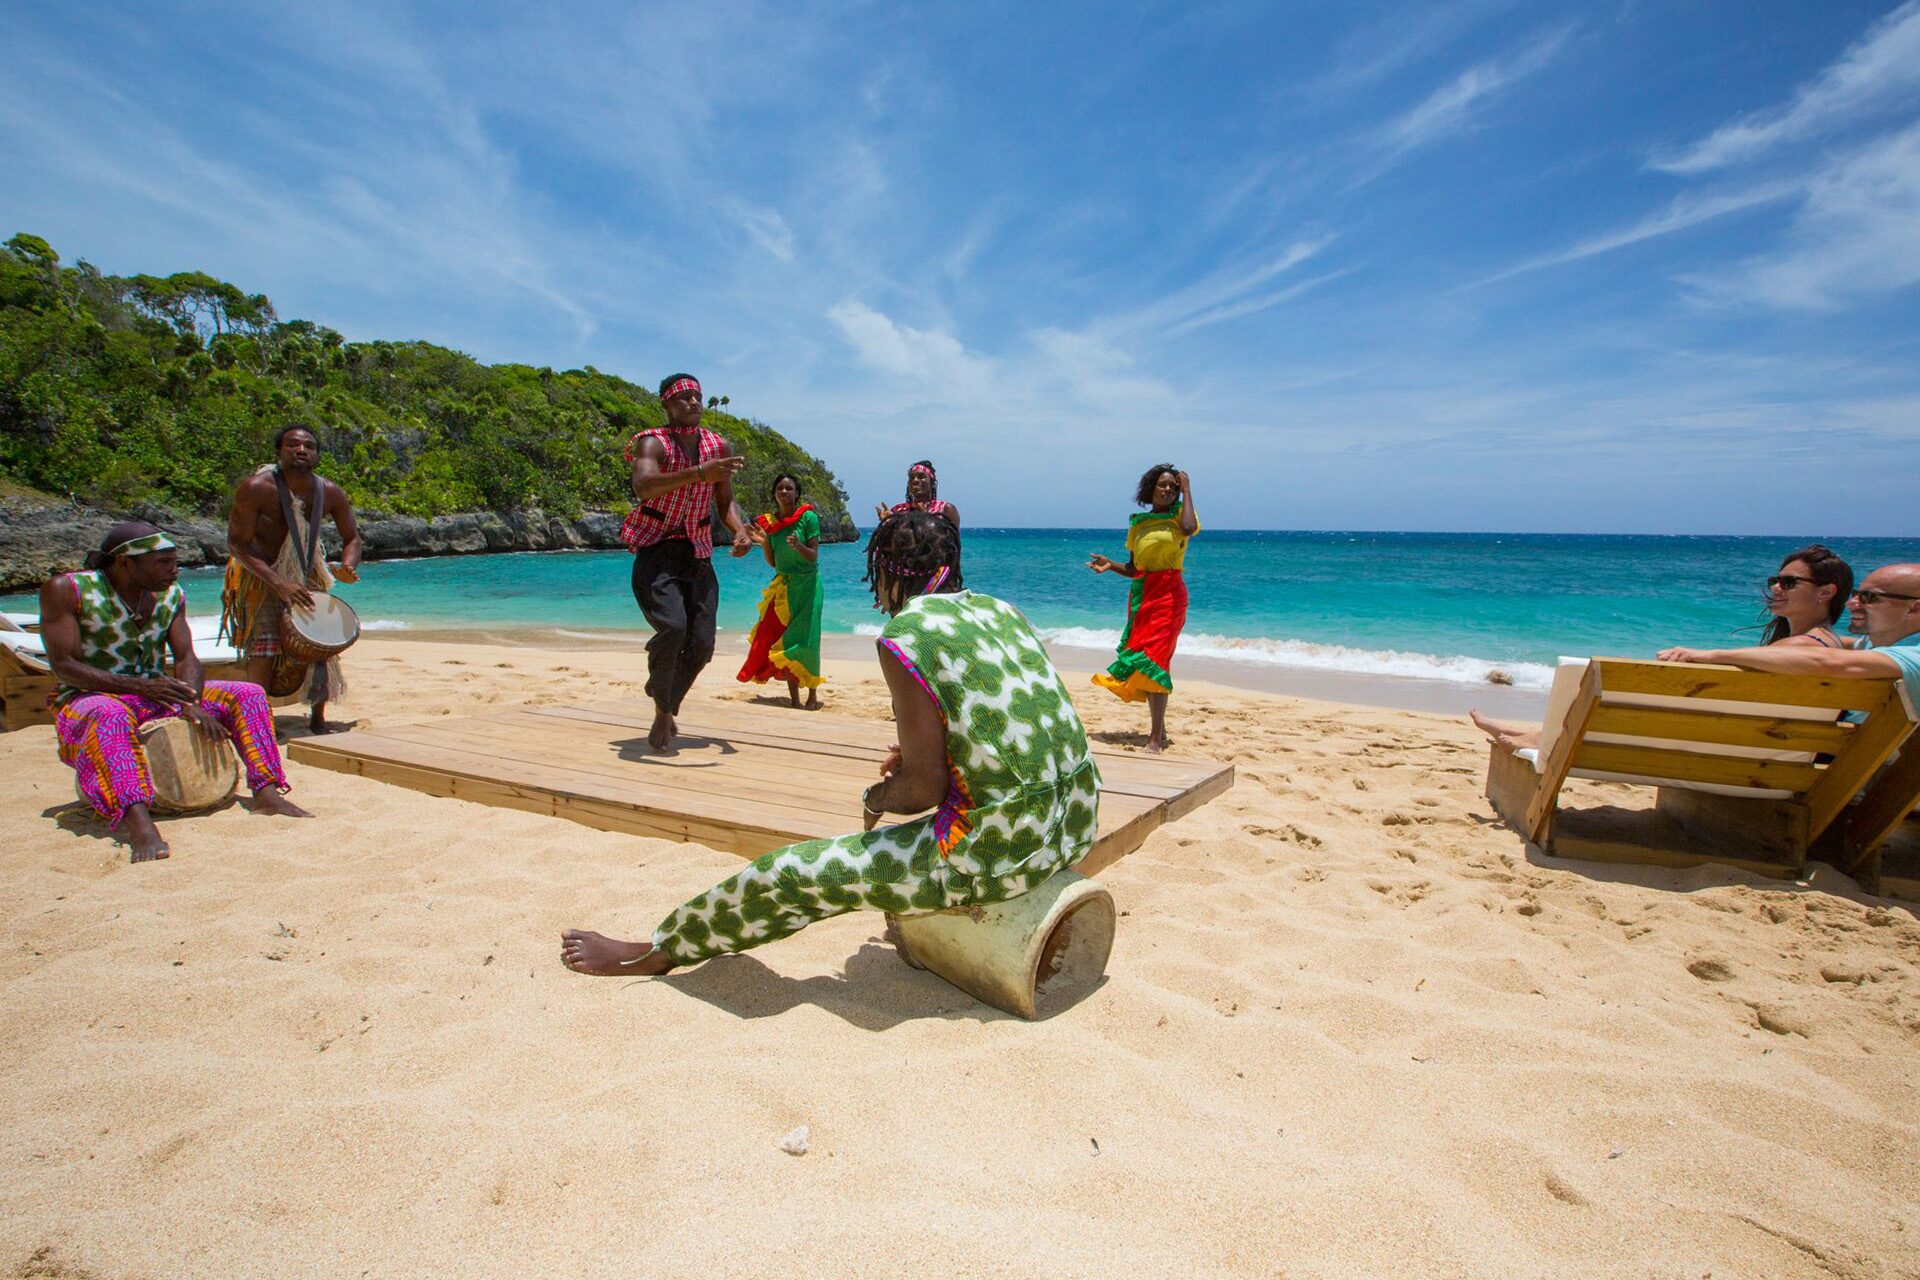 https://www.celebritycruises.com/blog/content/uploads/2021/12/caribbean-culture-jamaica-music-beach-hero-1.jpg